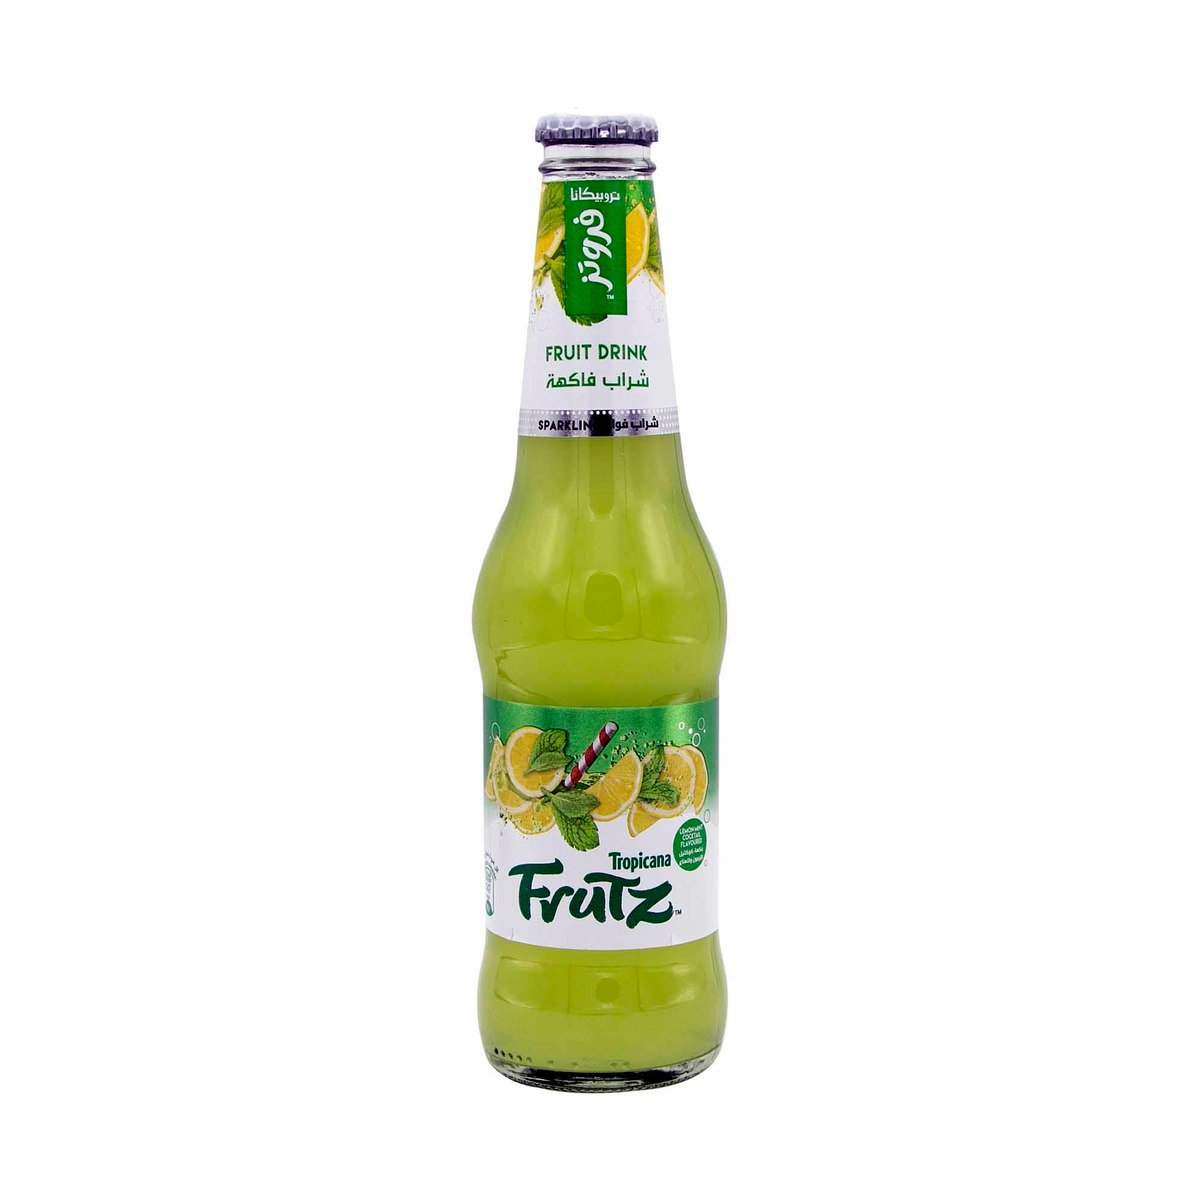 Tropicana Frutz Lemon Mint 300ml